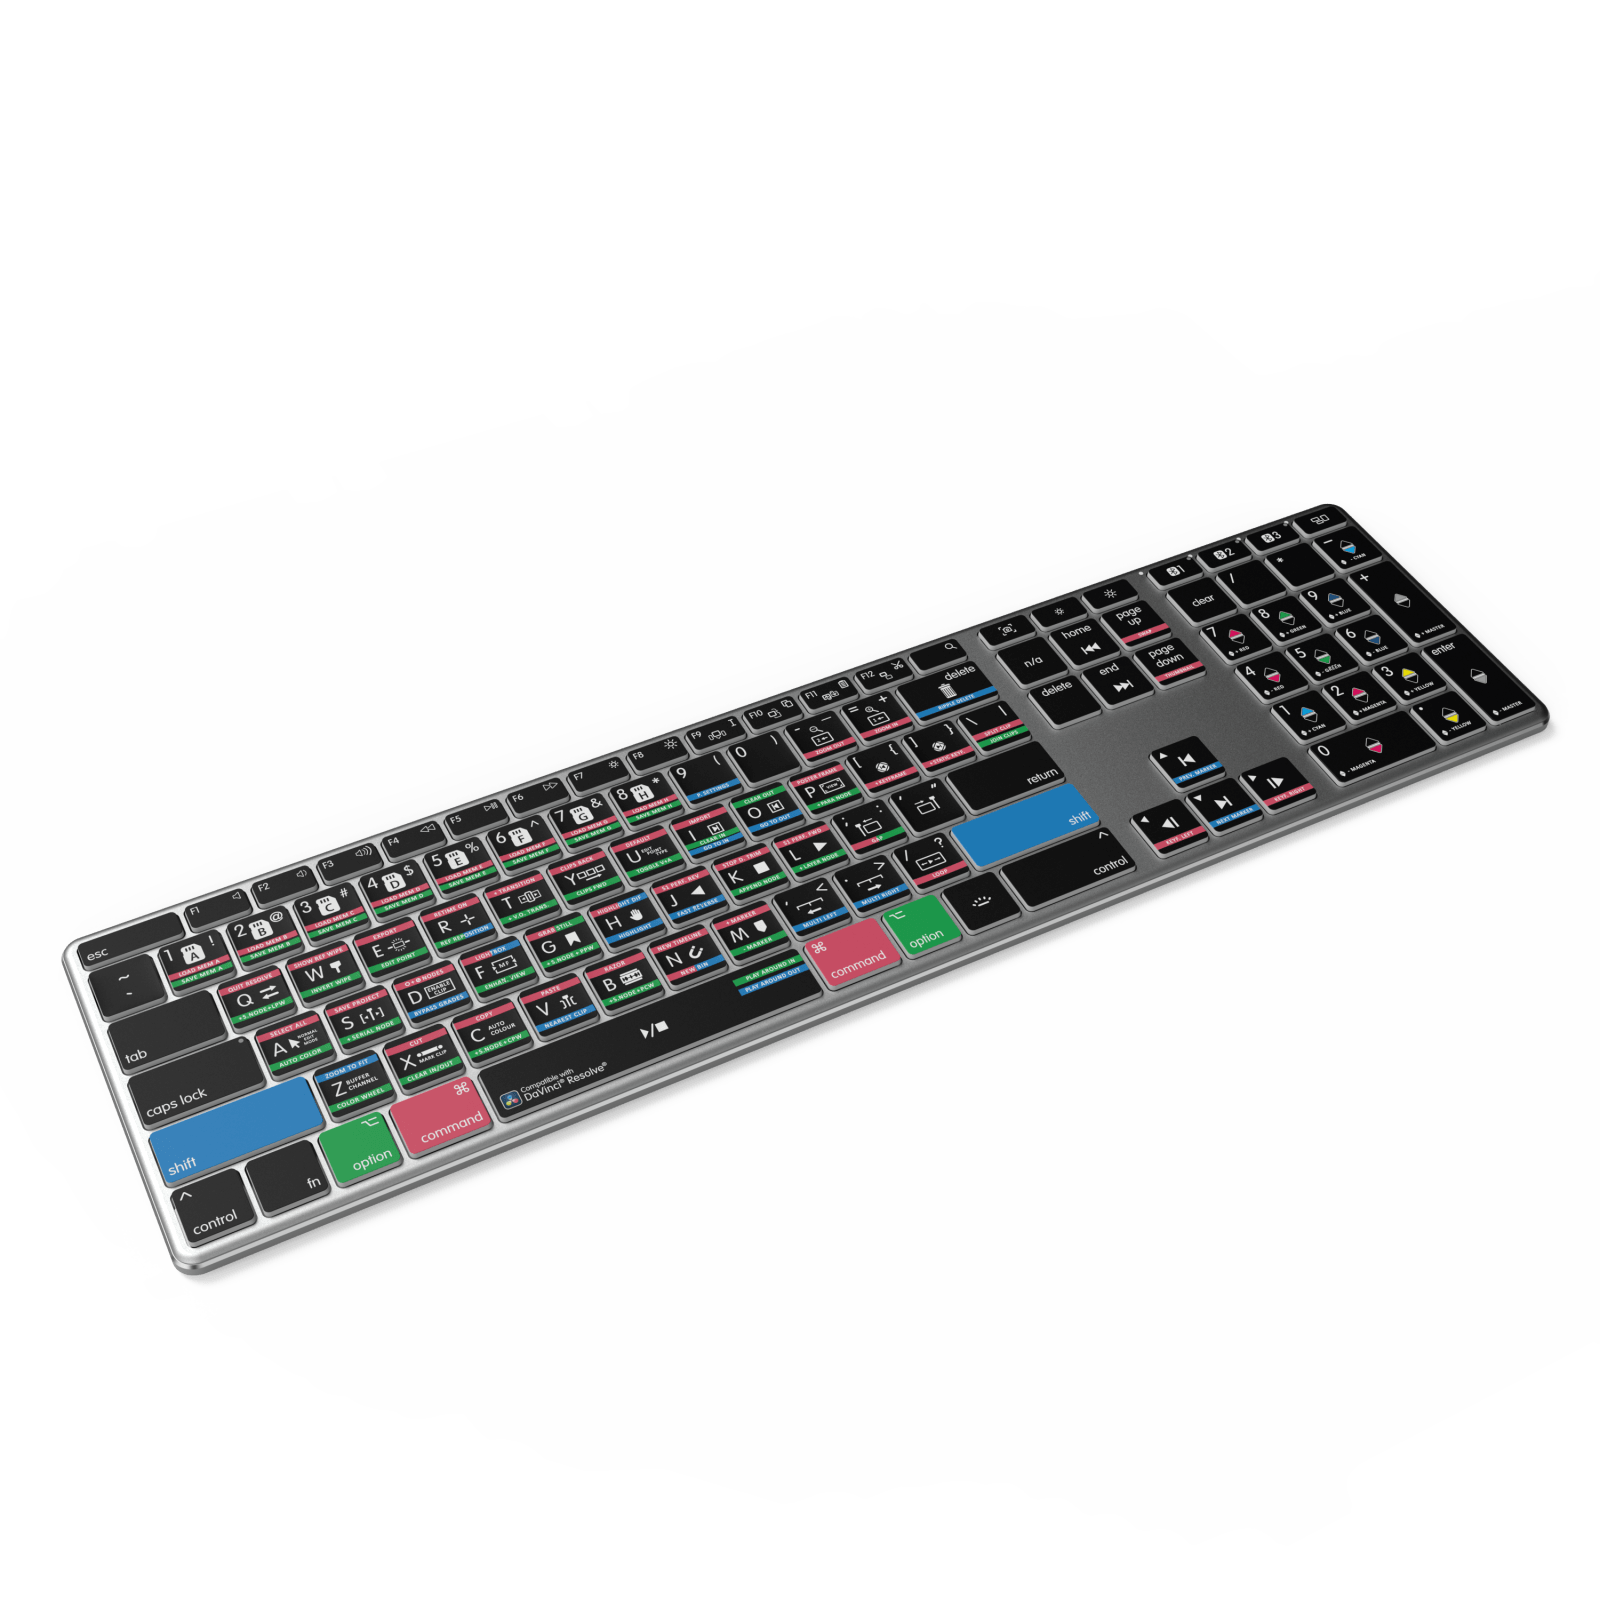 NEW Davinci Resolve Keyboard | Backlit & Wireless | Mac and PC - Editors Keys